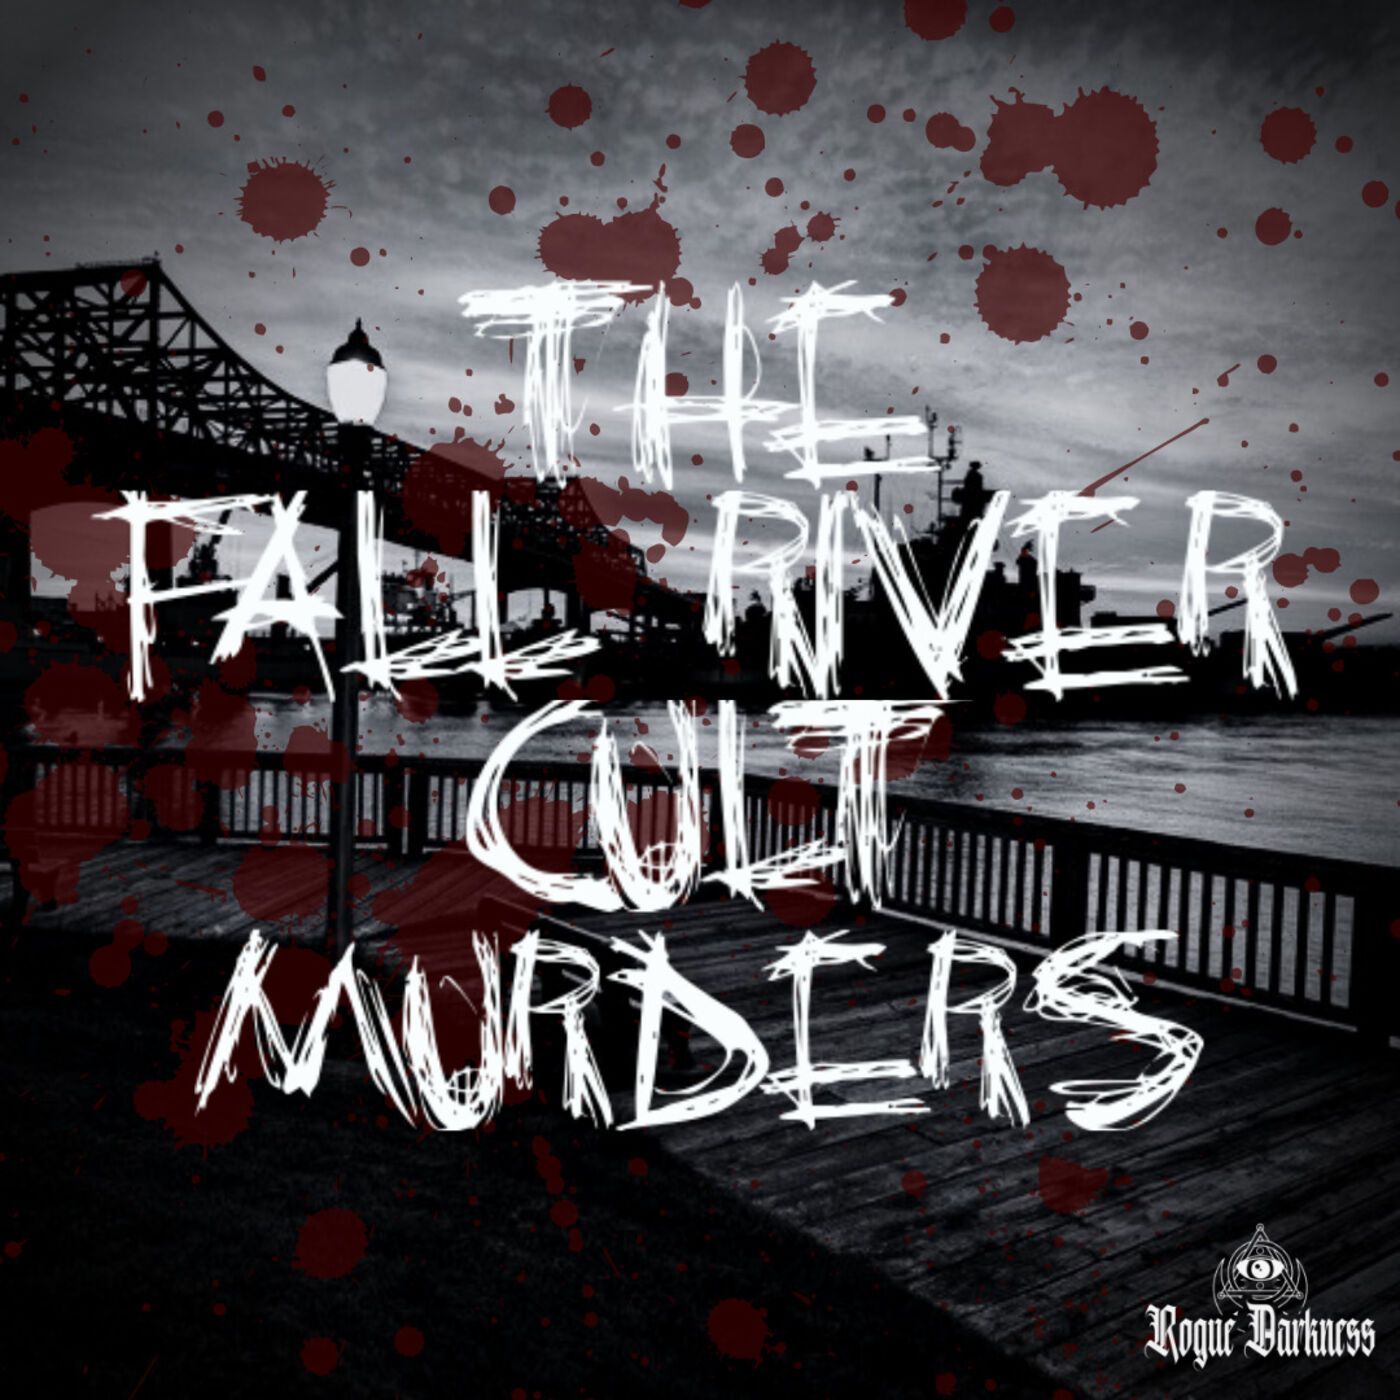 XXI: The Fall River Cult Murders